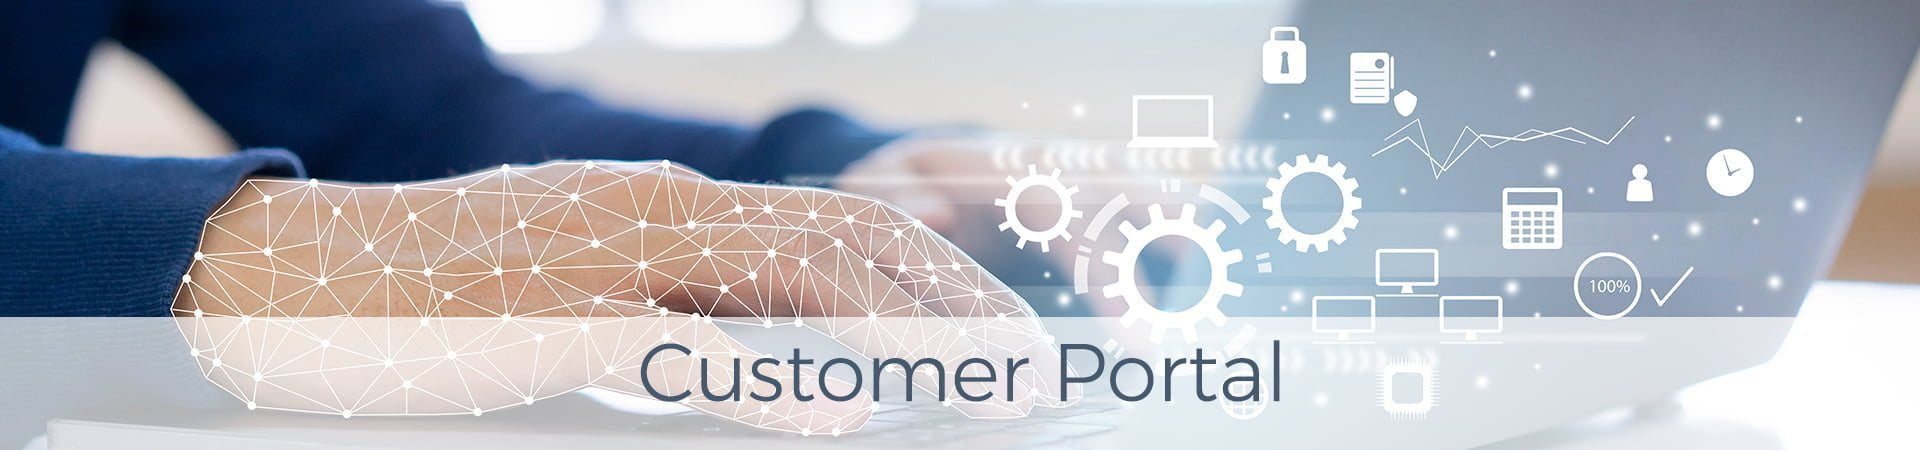 Customer portal